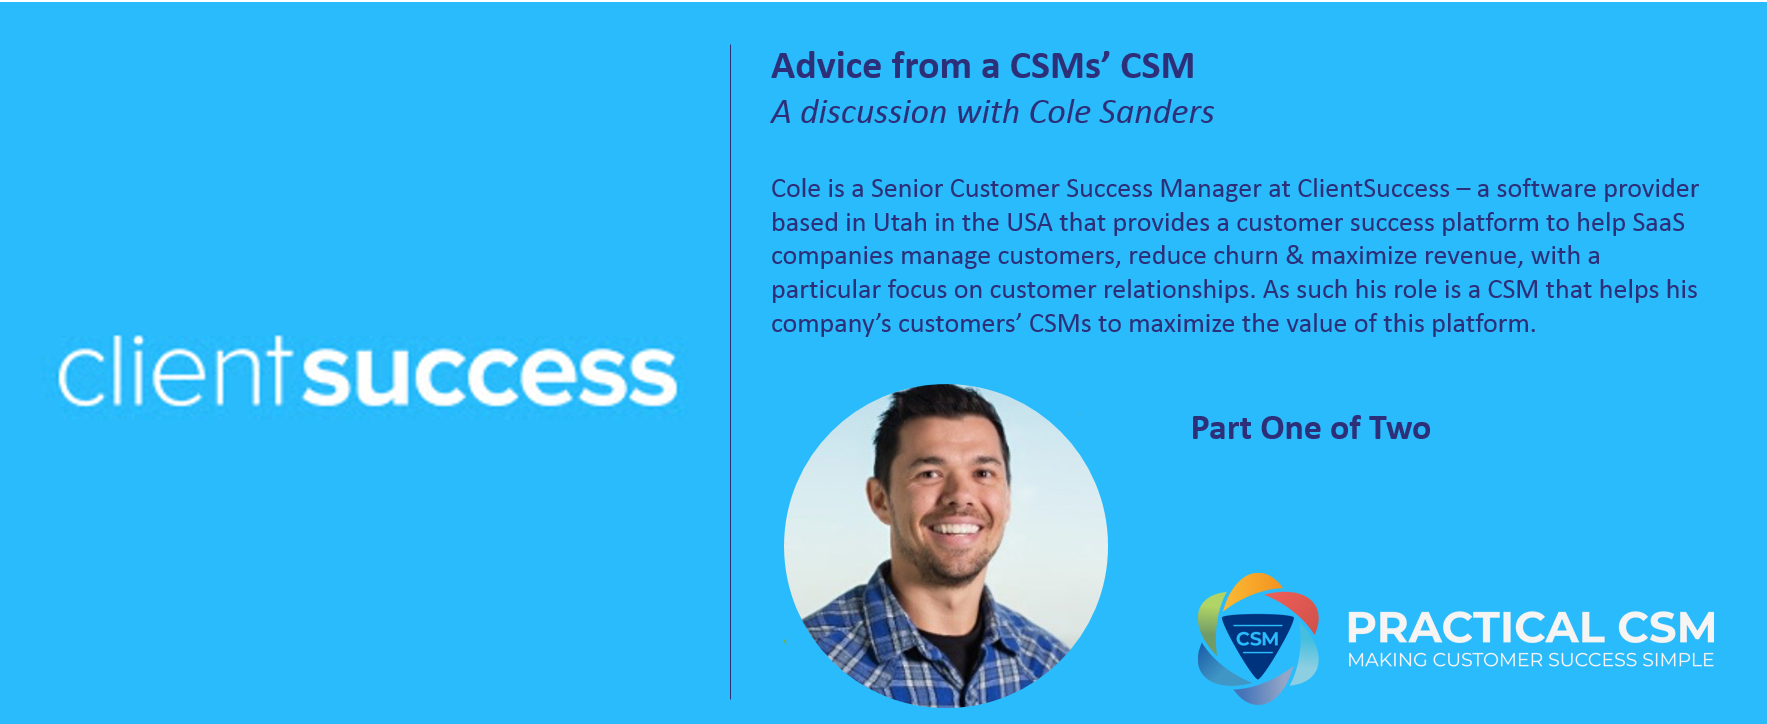 Advice from a CSM's CSM - Part 1 (Audio)- Practical CSM